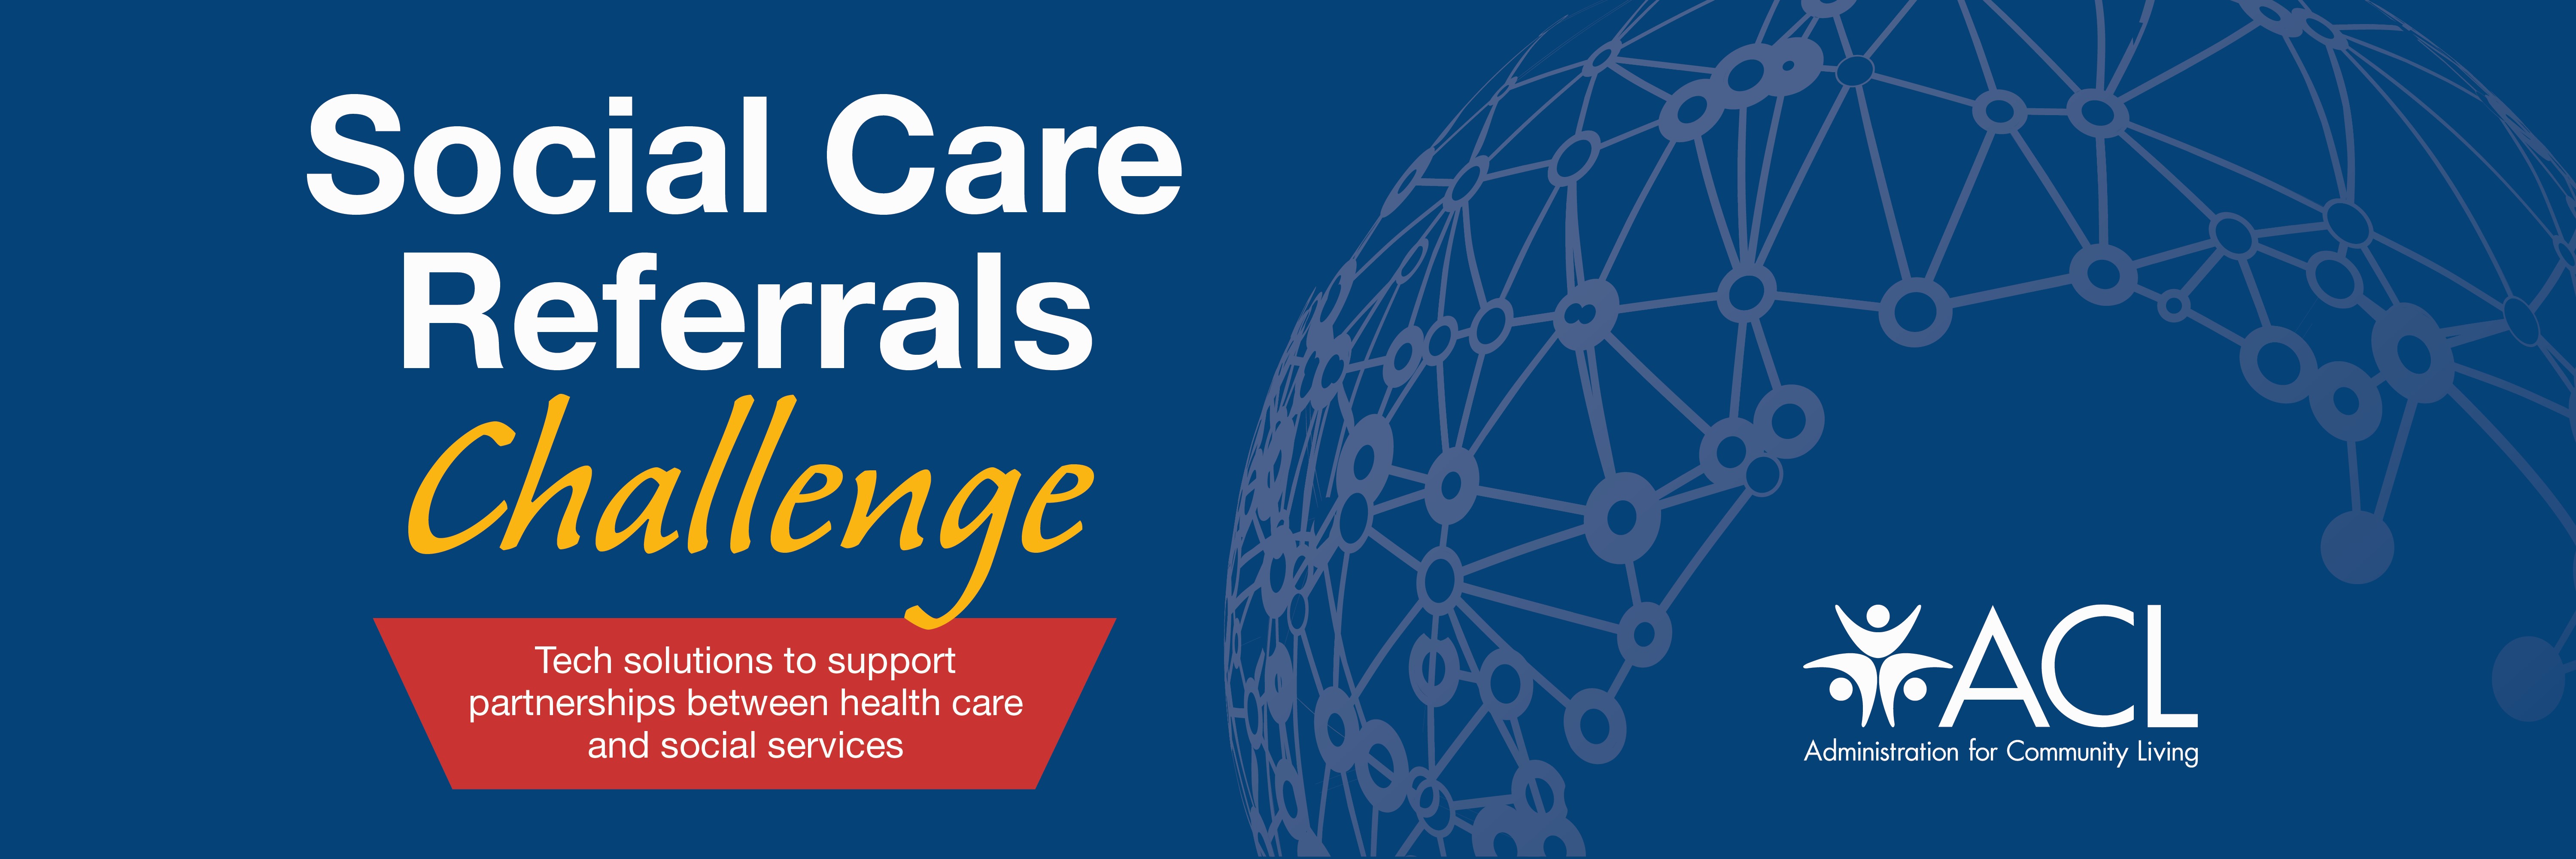 Social Care Referrals Challenge Web Banner